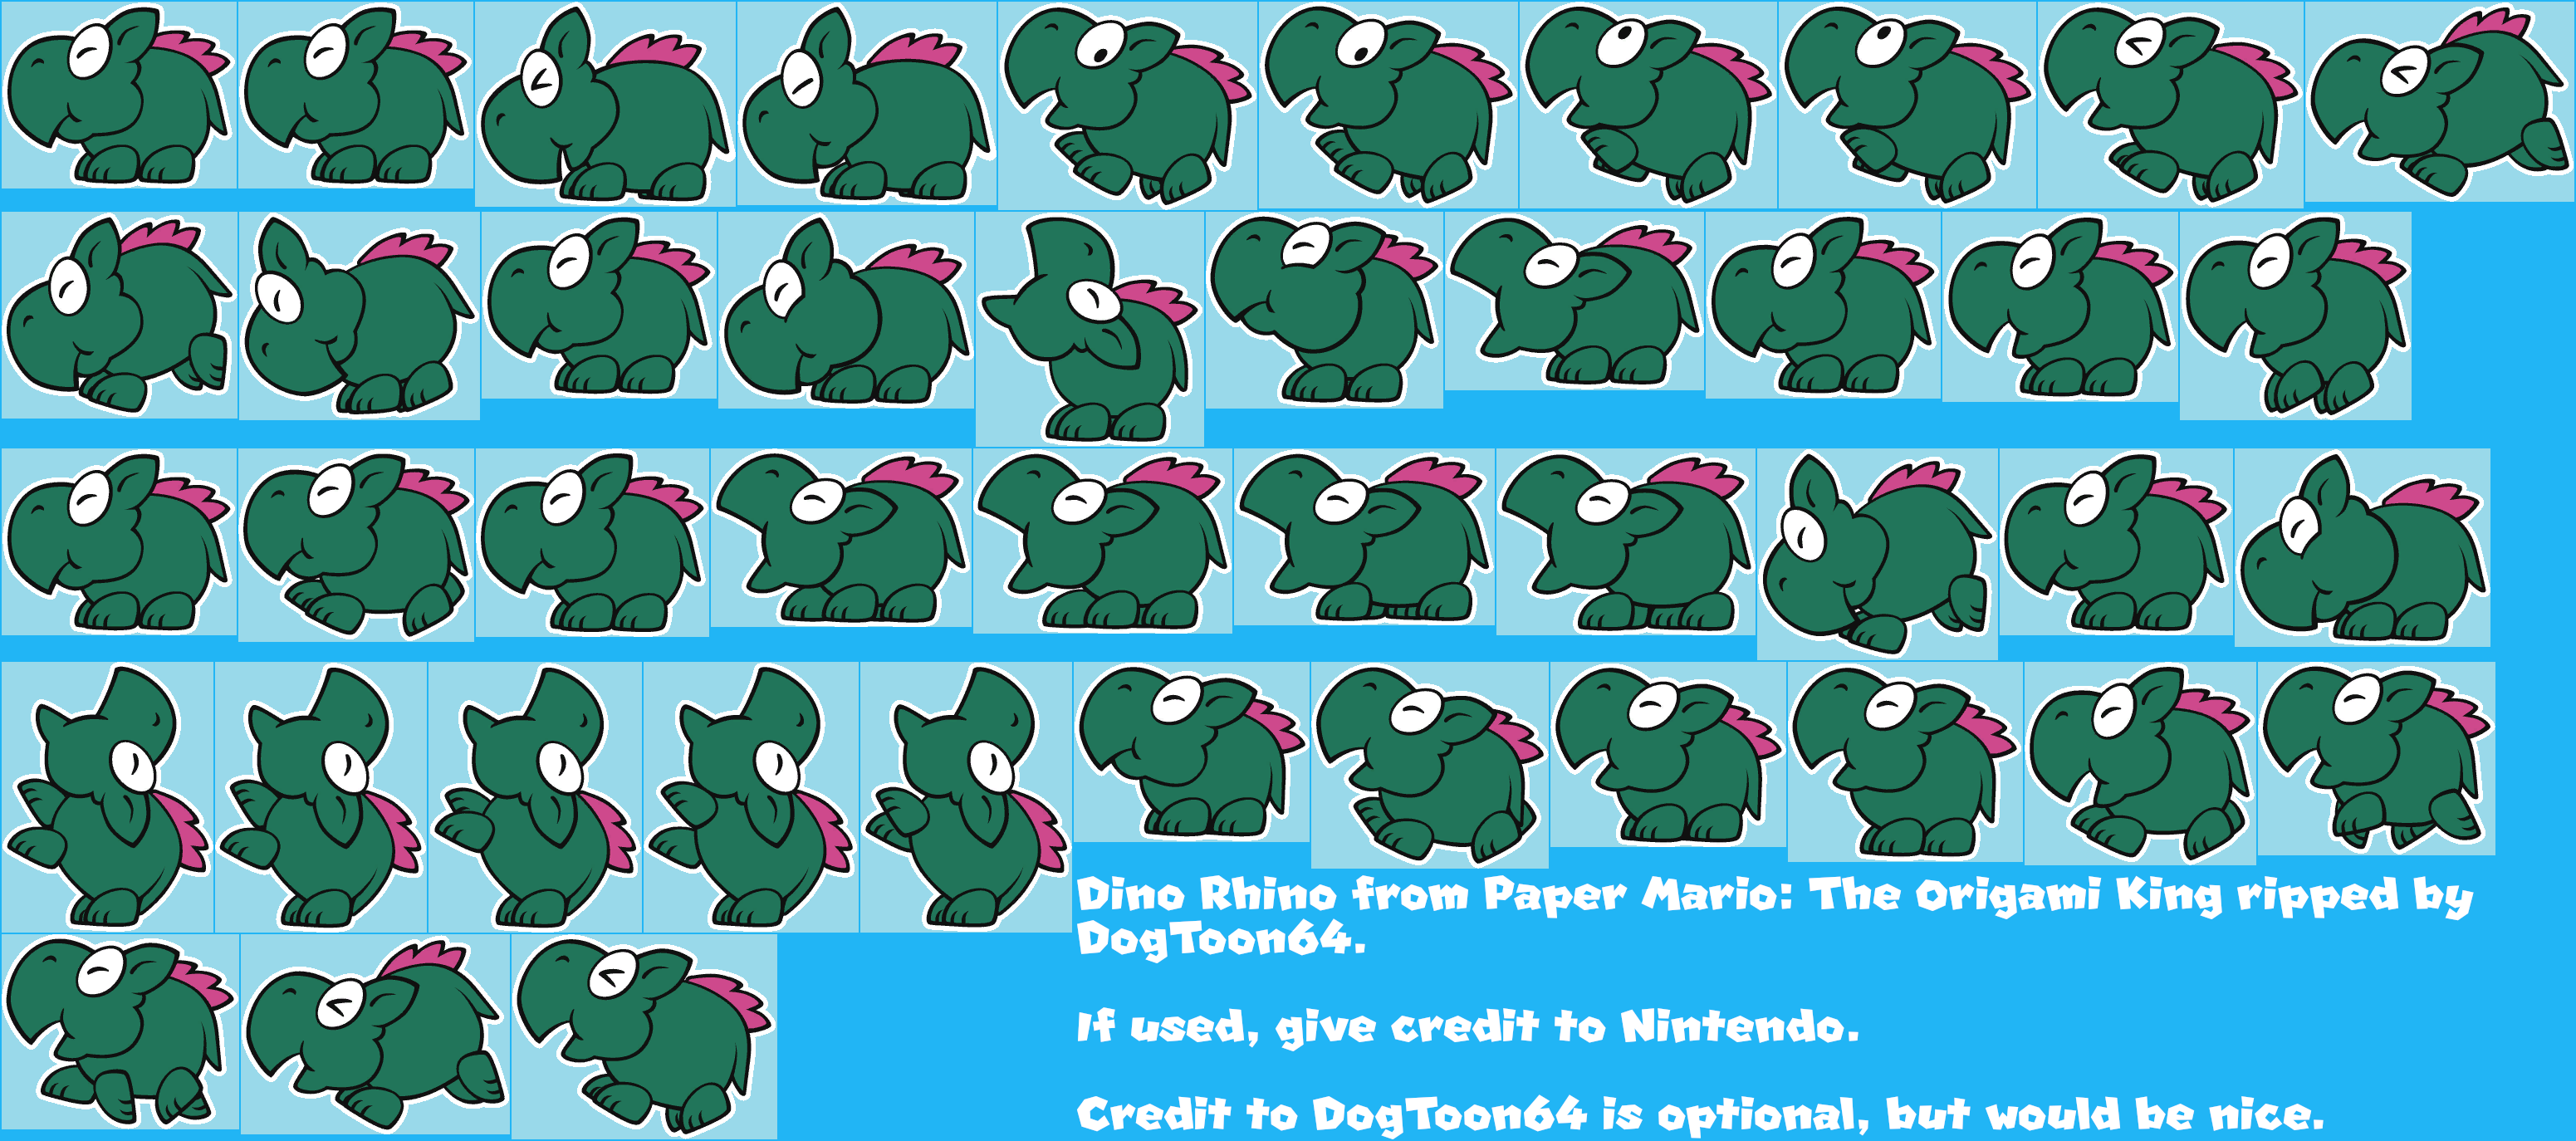 Paper Mario: The Origami King - Dino Rhino